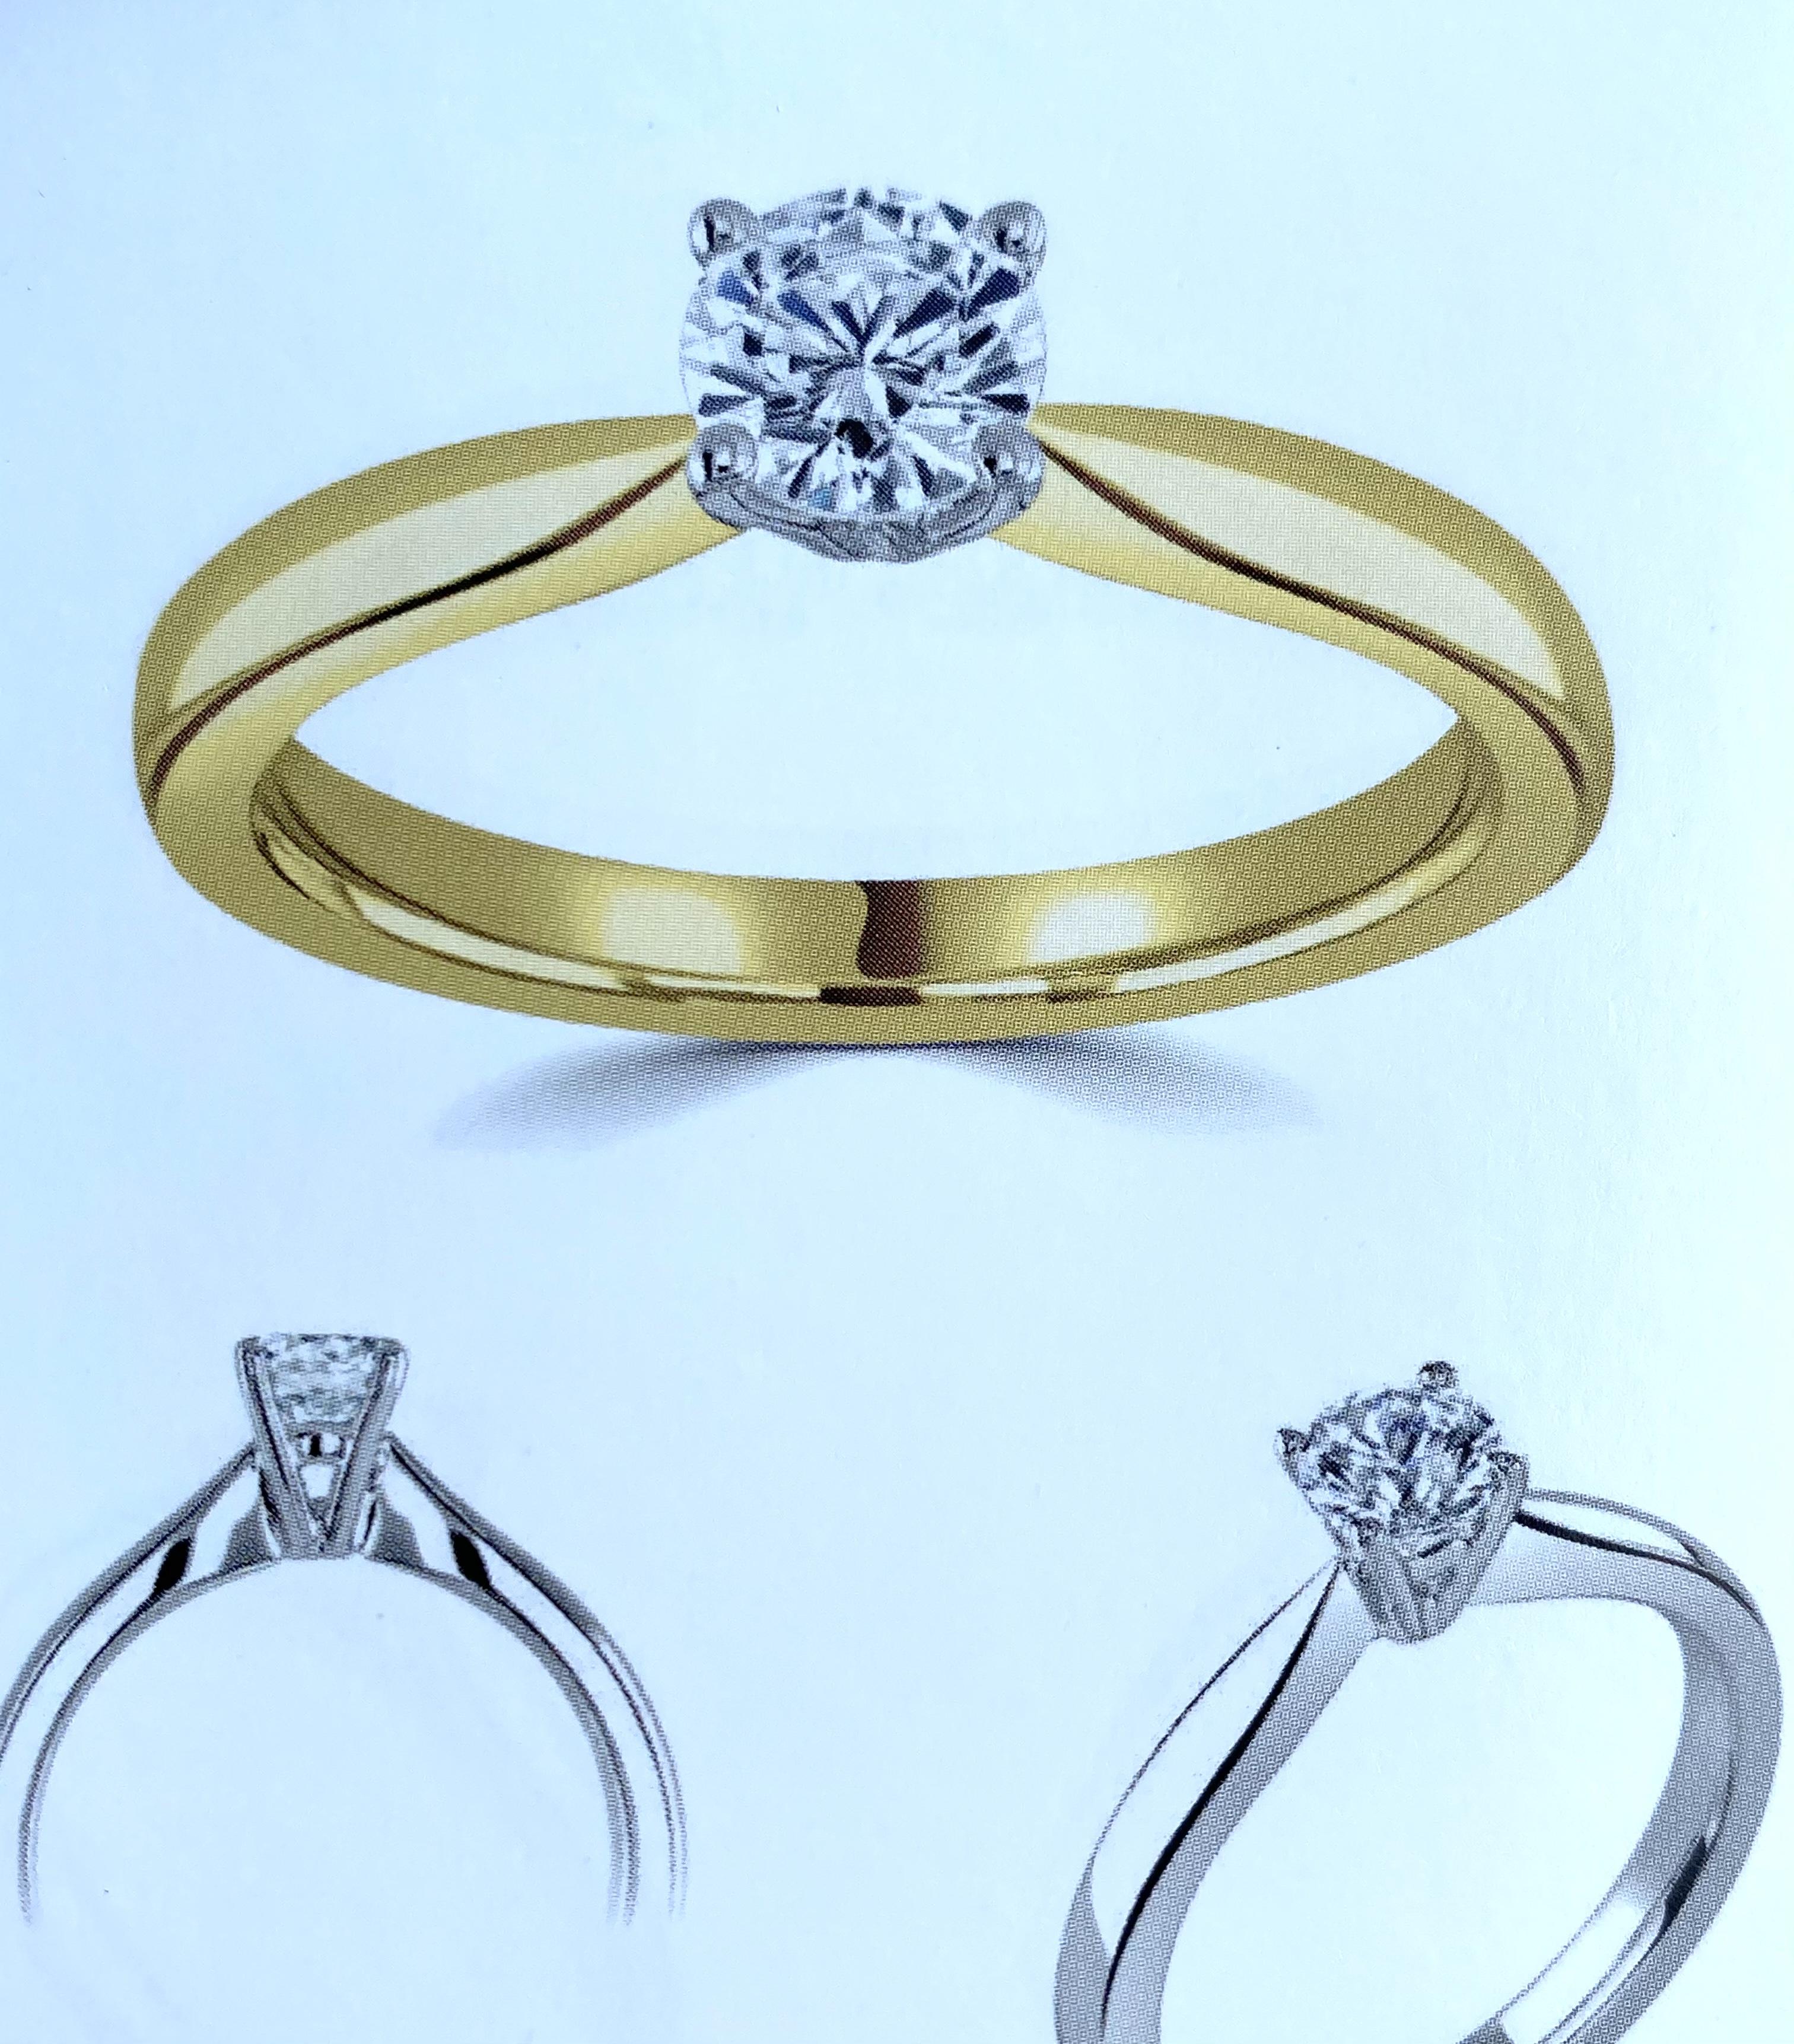 Diamond Rings & April Birthstone Rings | Tiffany & Co.